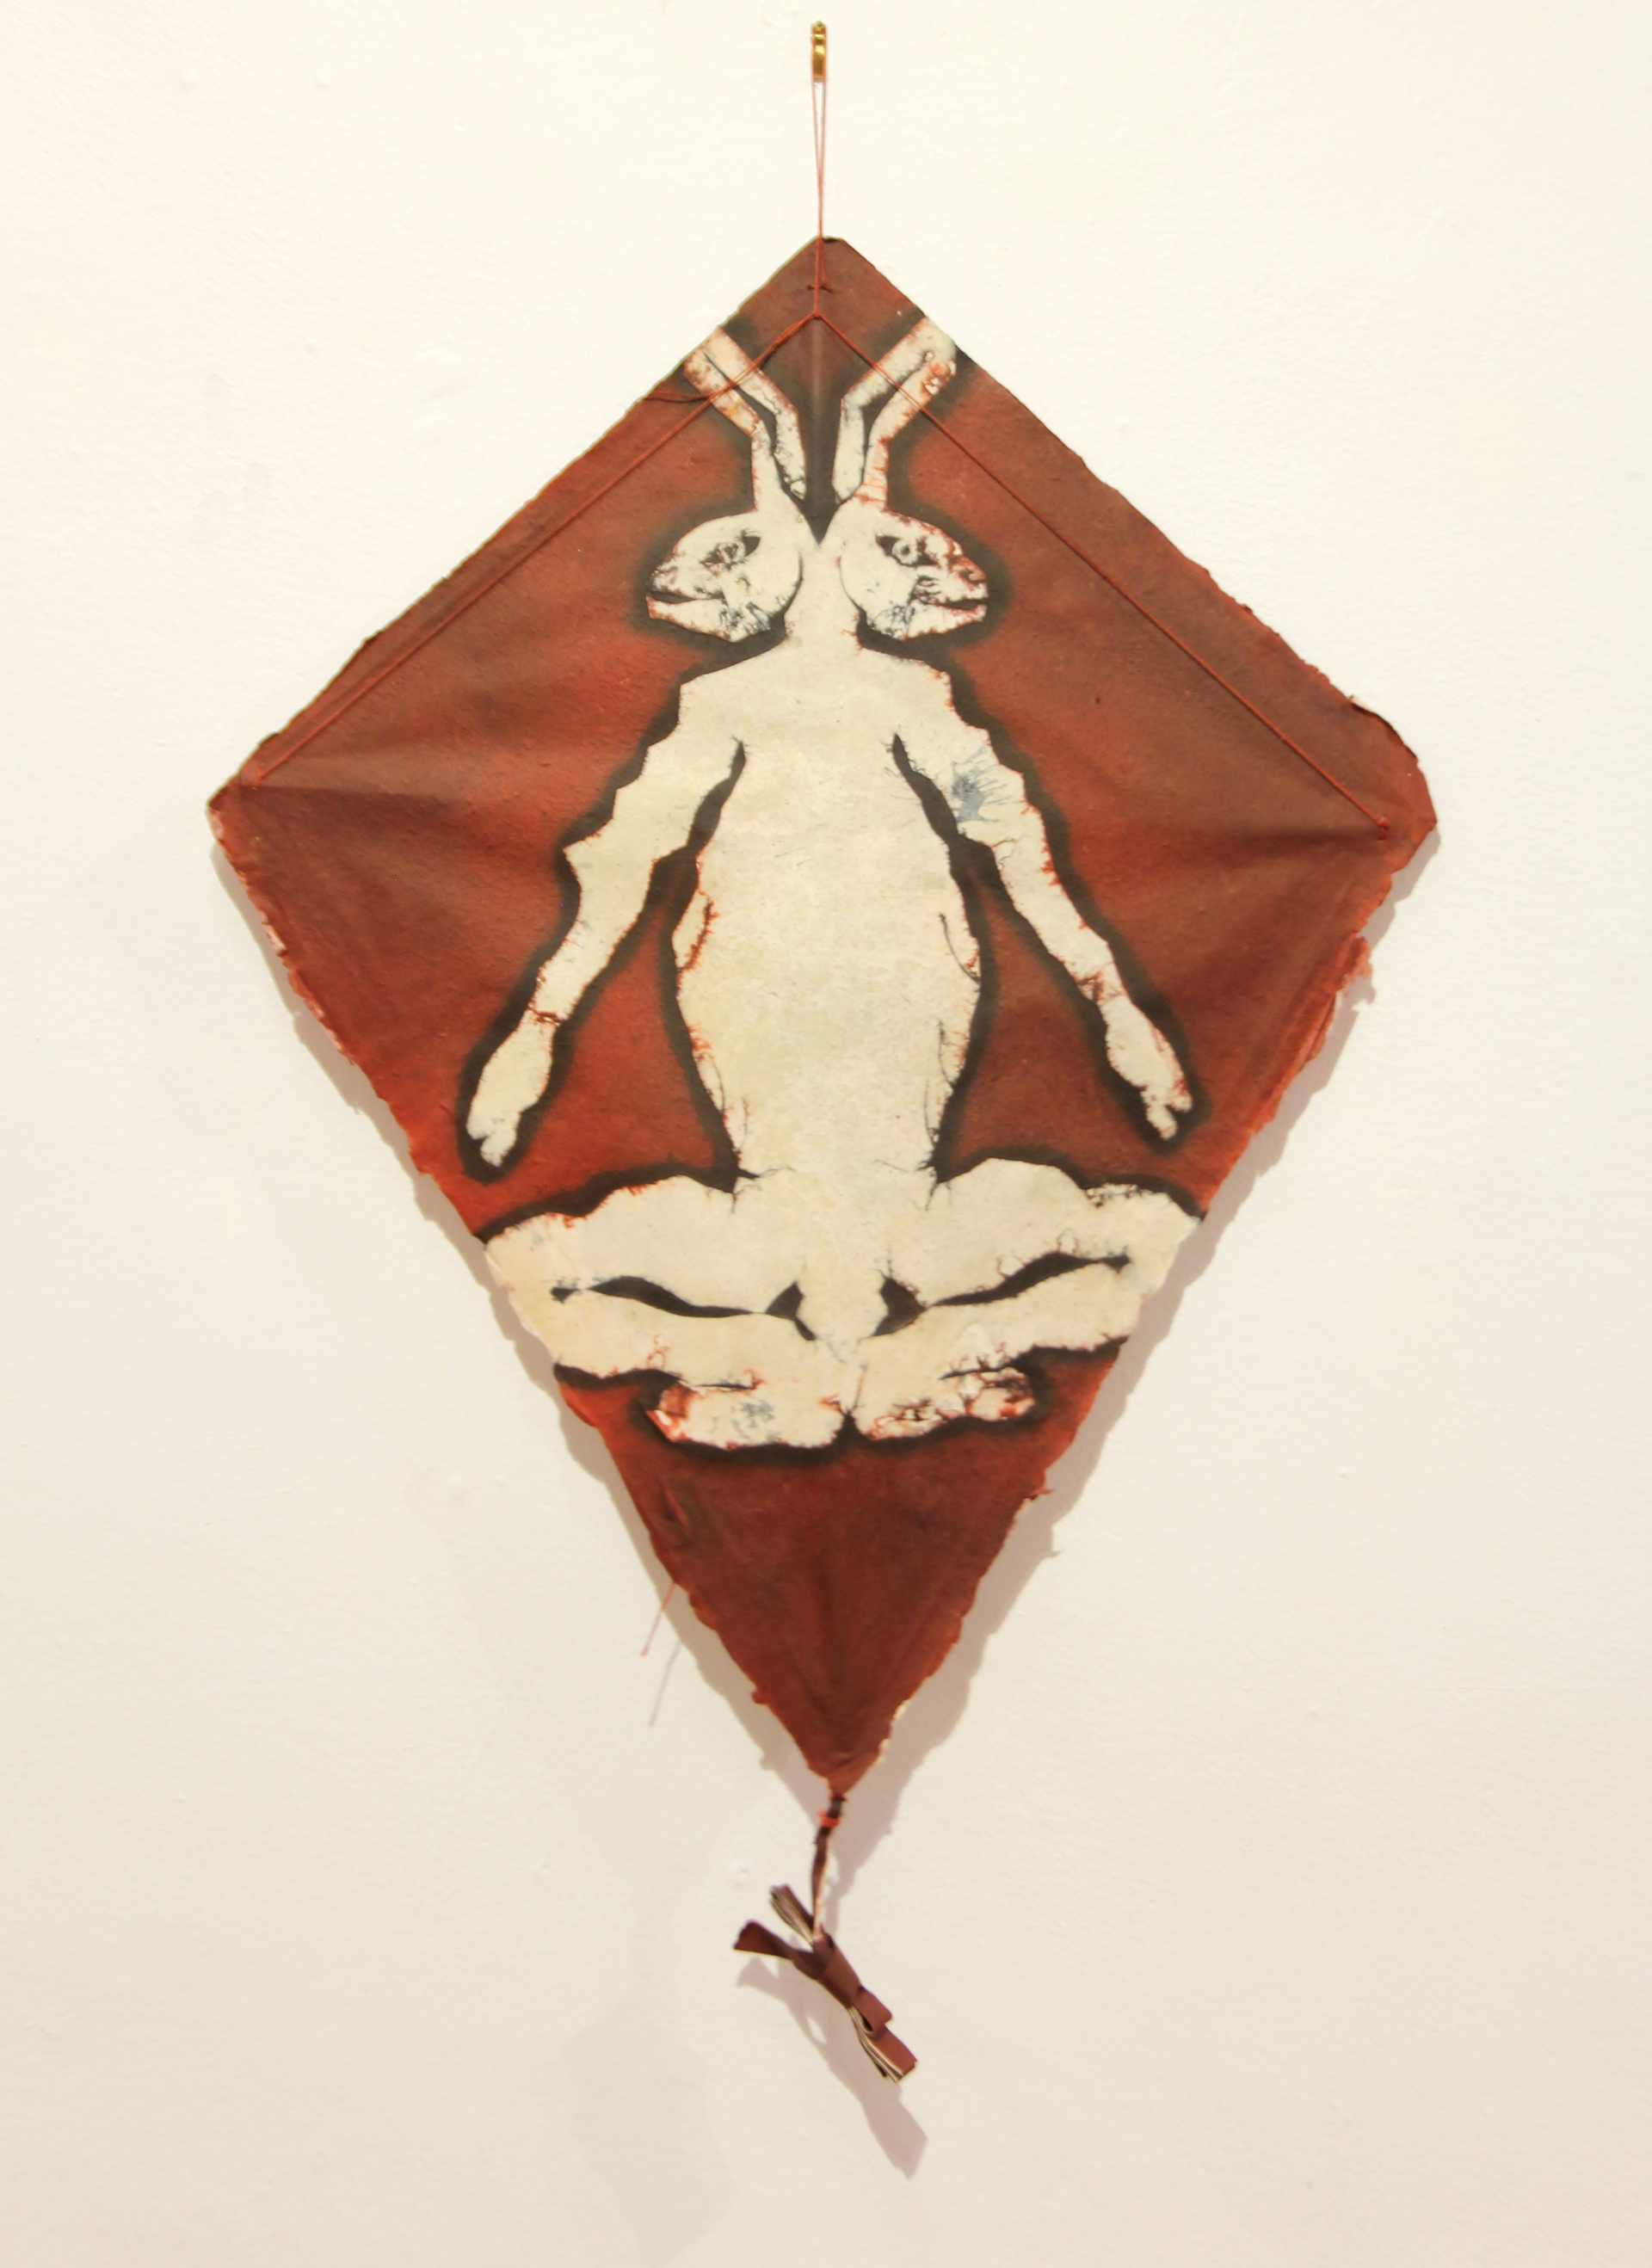 Conejos Kite by Francisco Toledo (1940 - 2019)